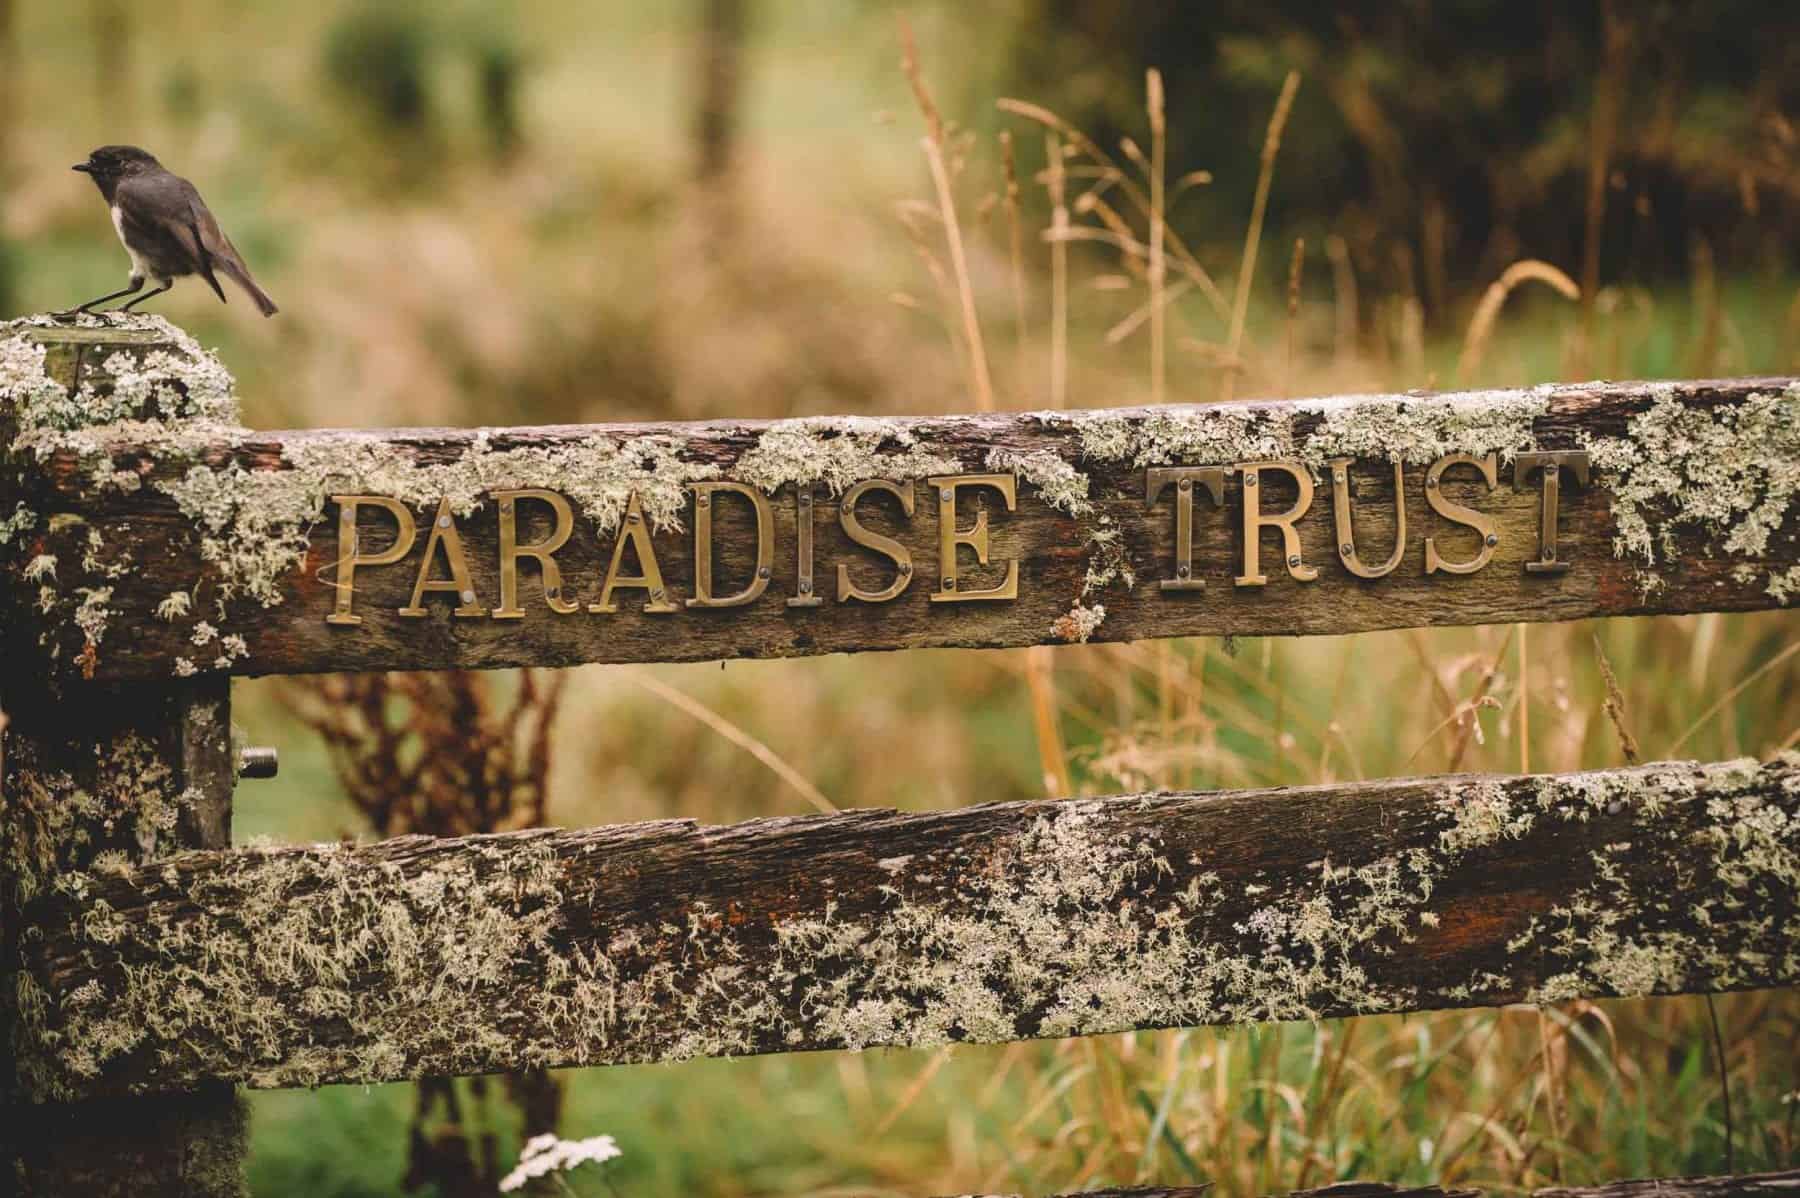 paradise trust wedding